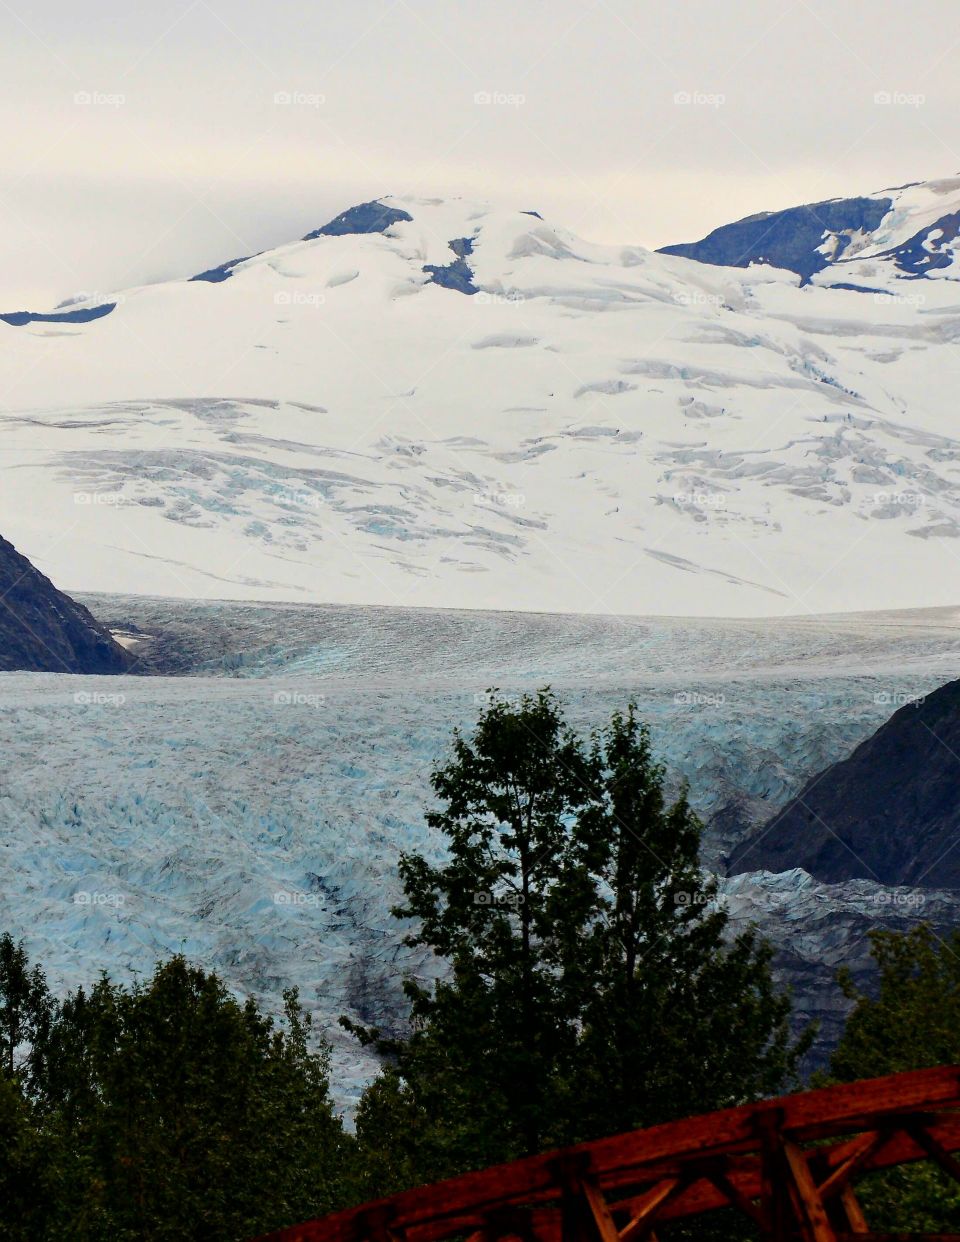 Alaska's glaciers